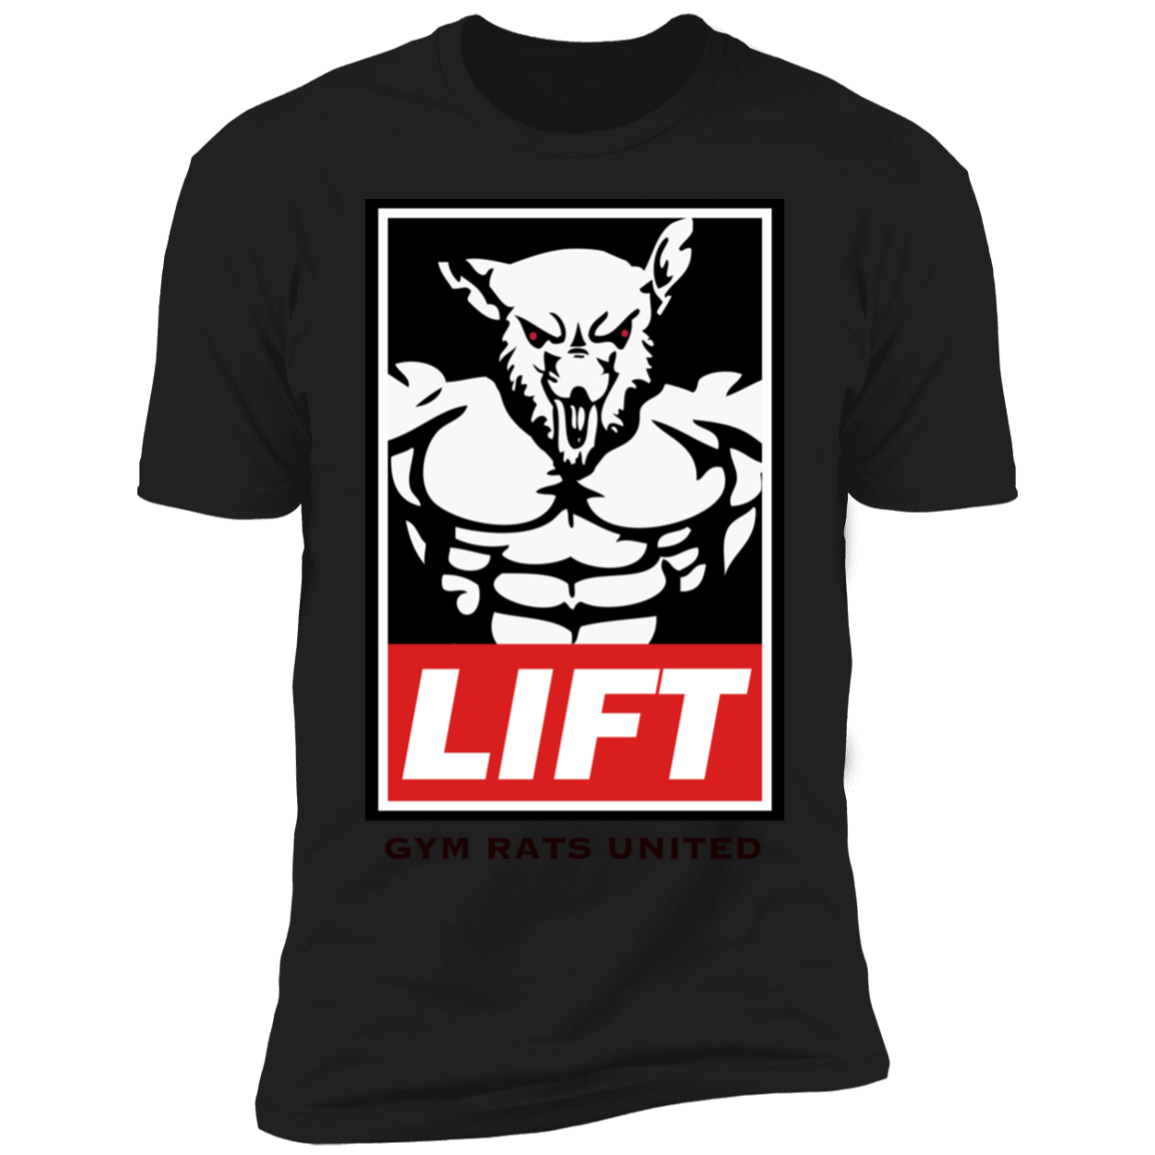 Gym Rats United Lift Tee